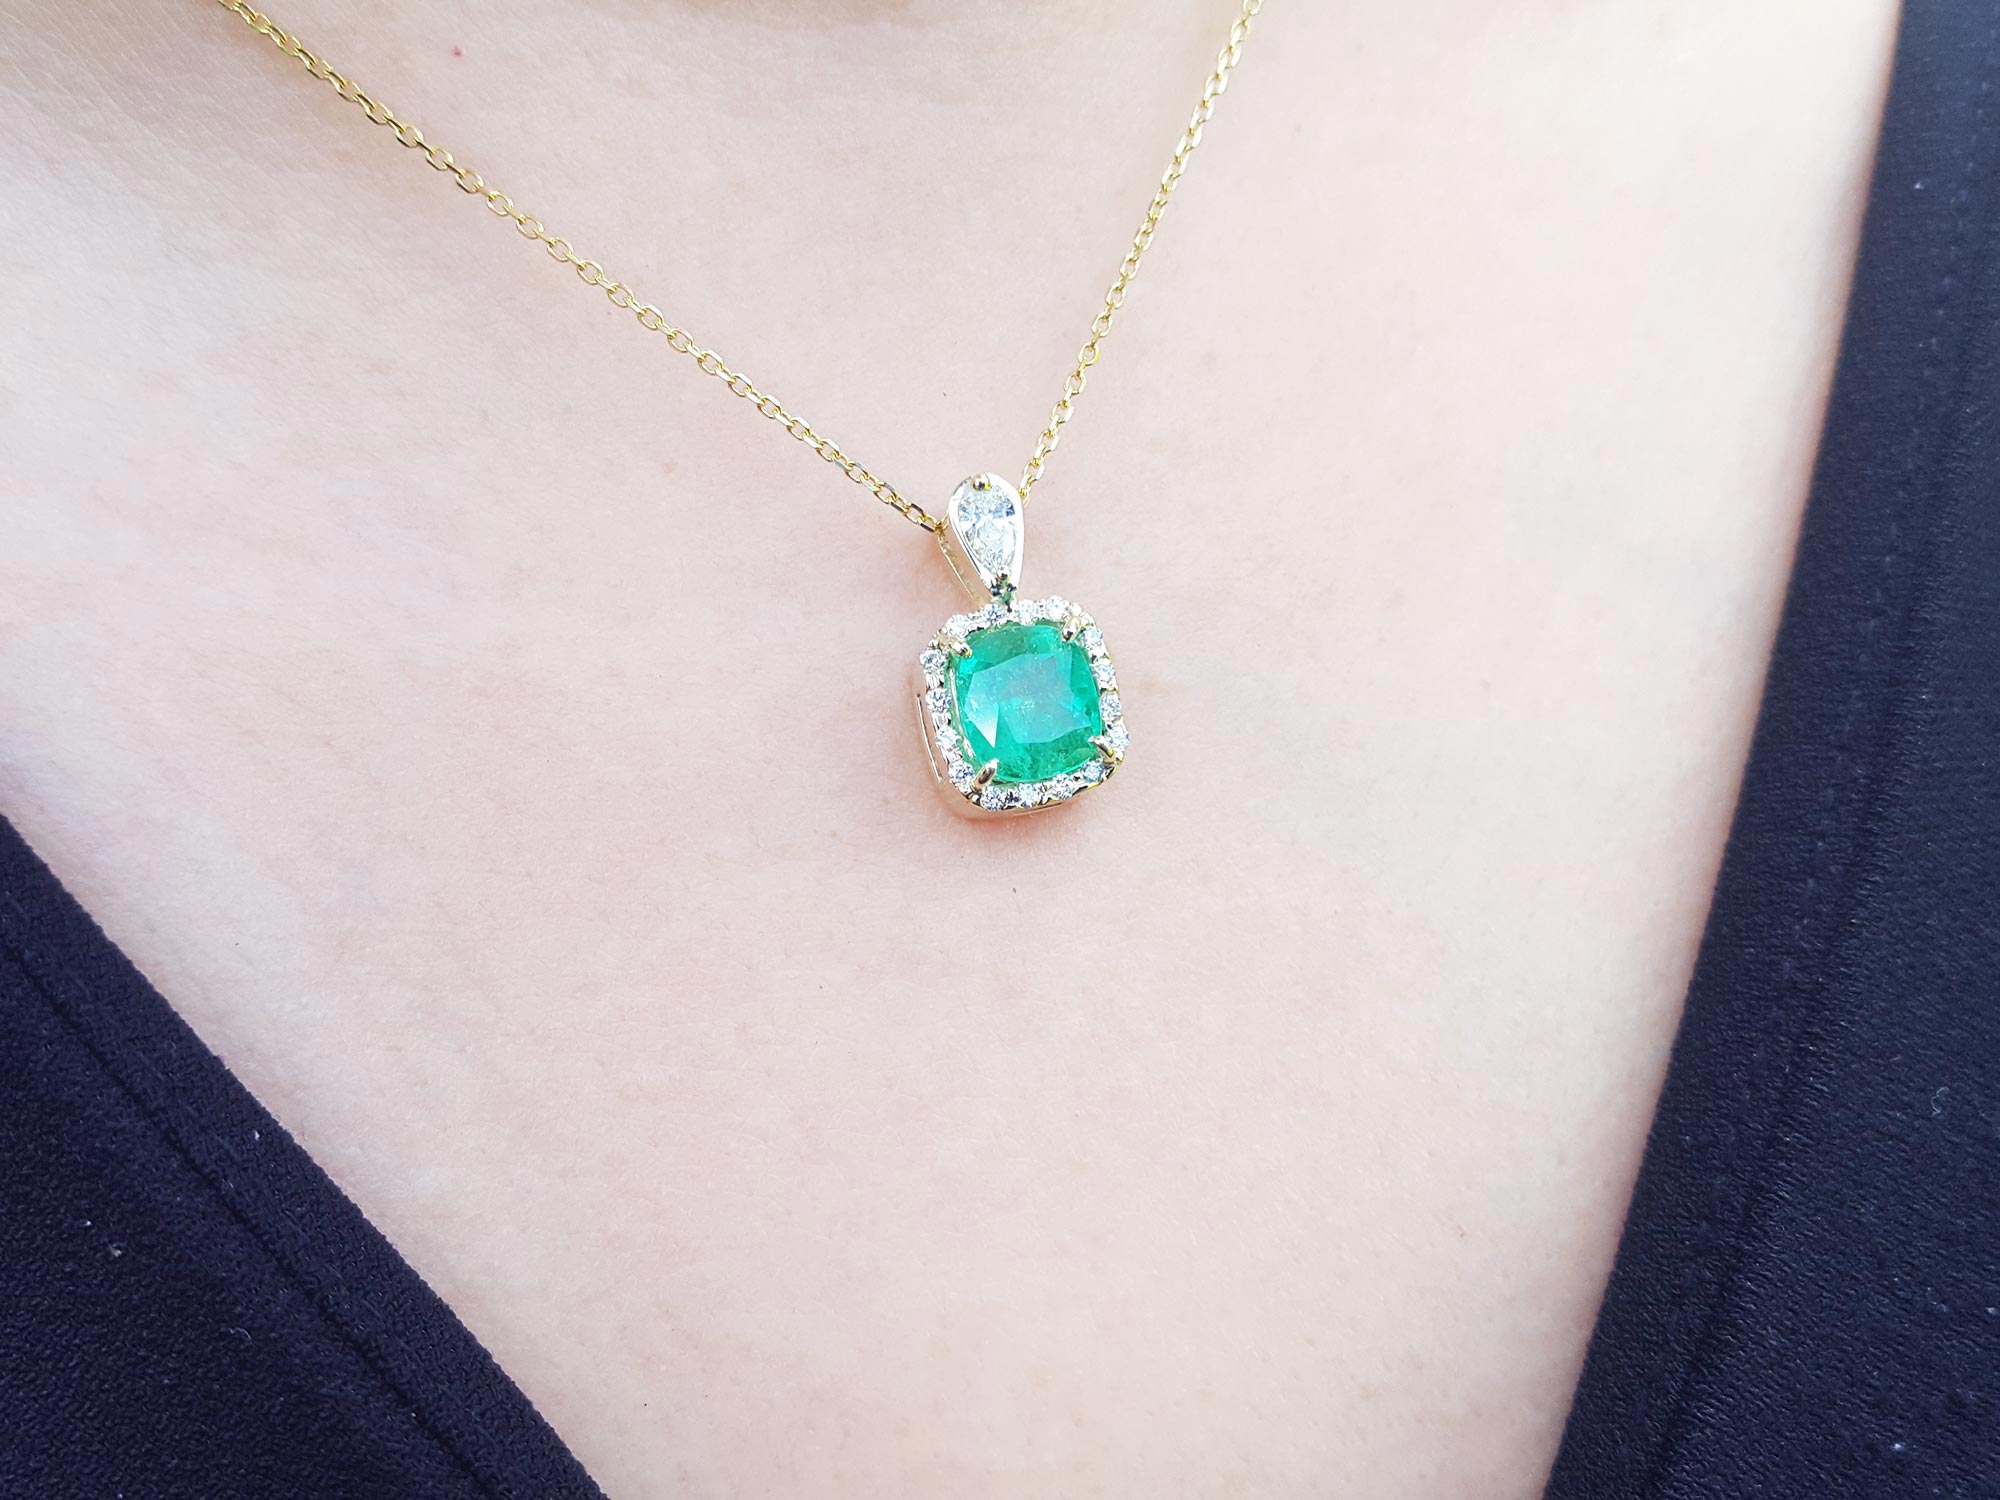 Emerald-cut real emerald pendant